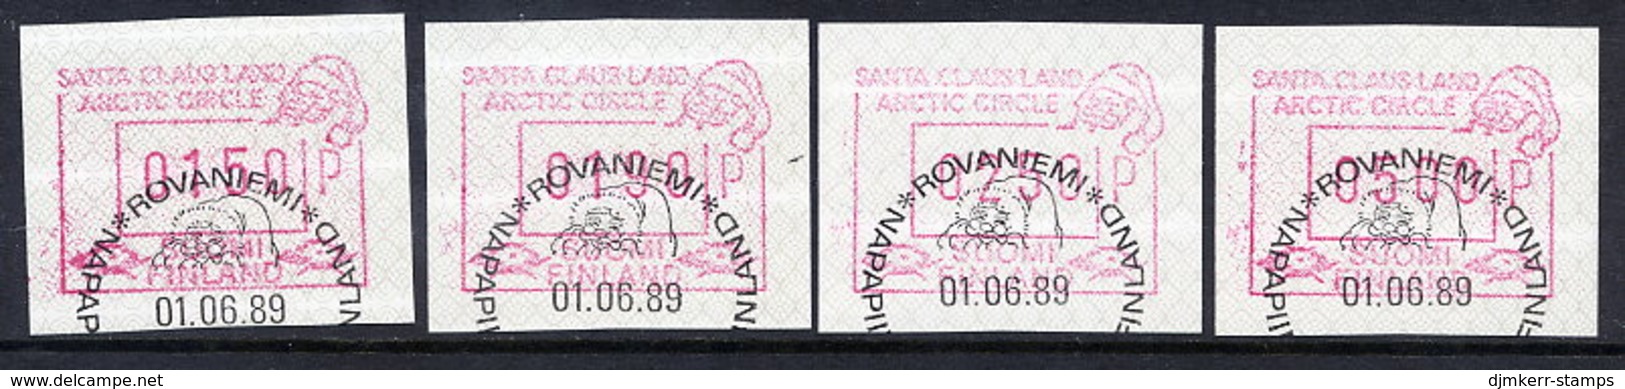 FINLAND 1989 Santa Claus Land , 4 Different Values Used .Michel 6 - Automatenmarken [ATM]